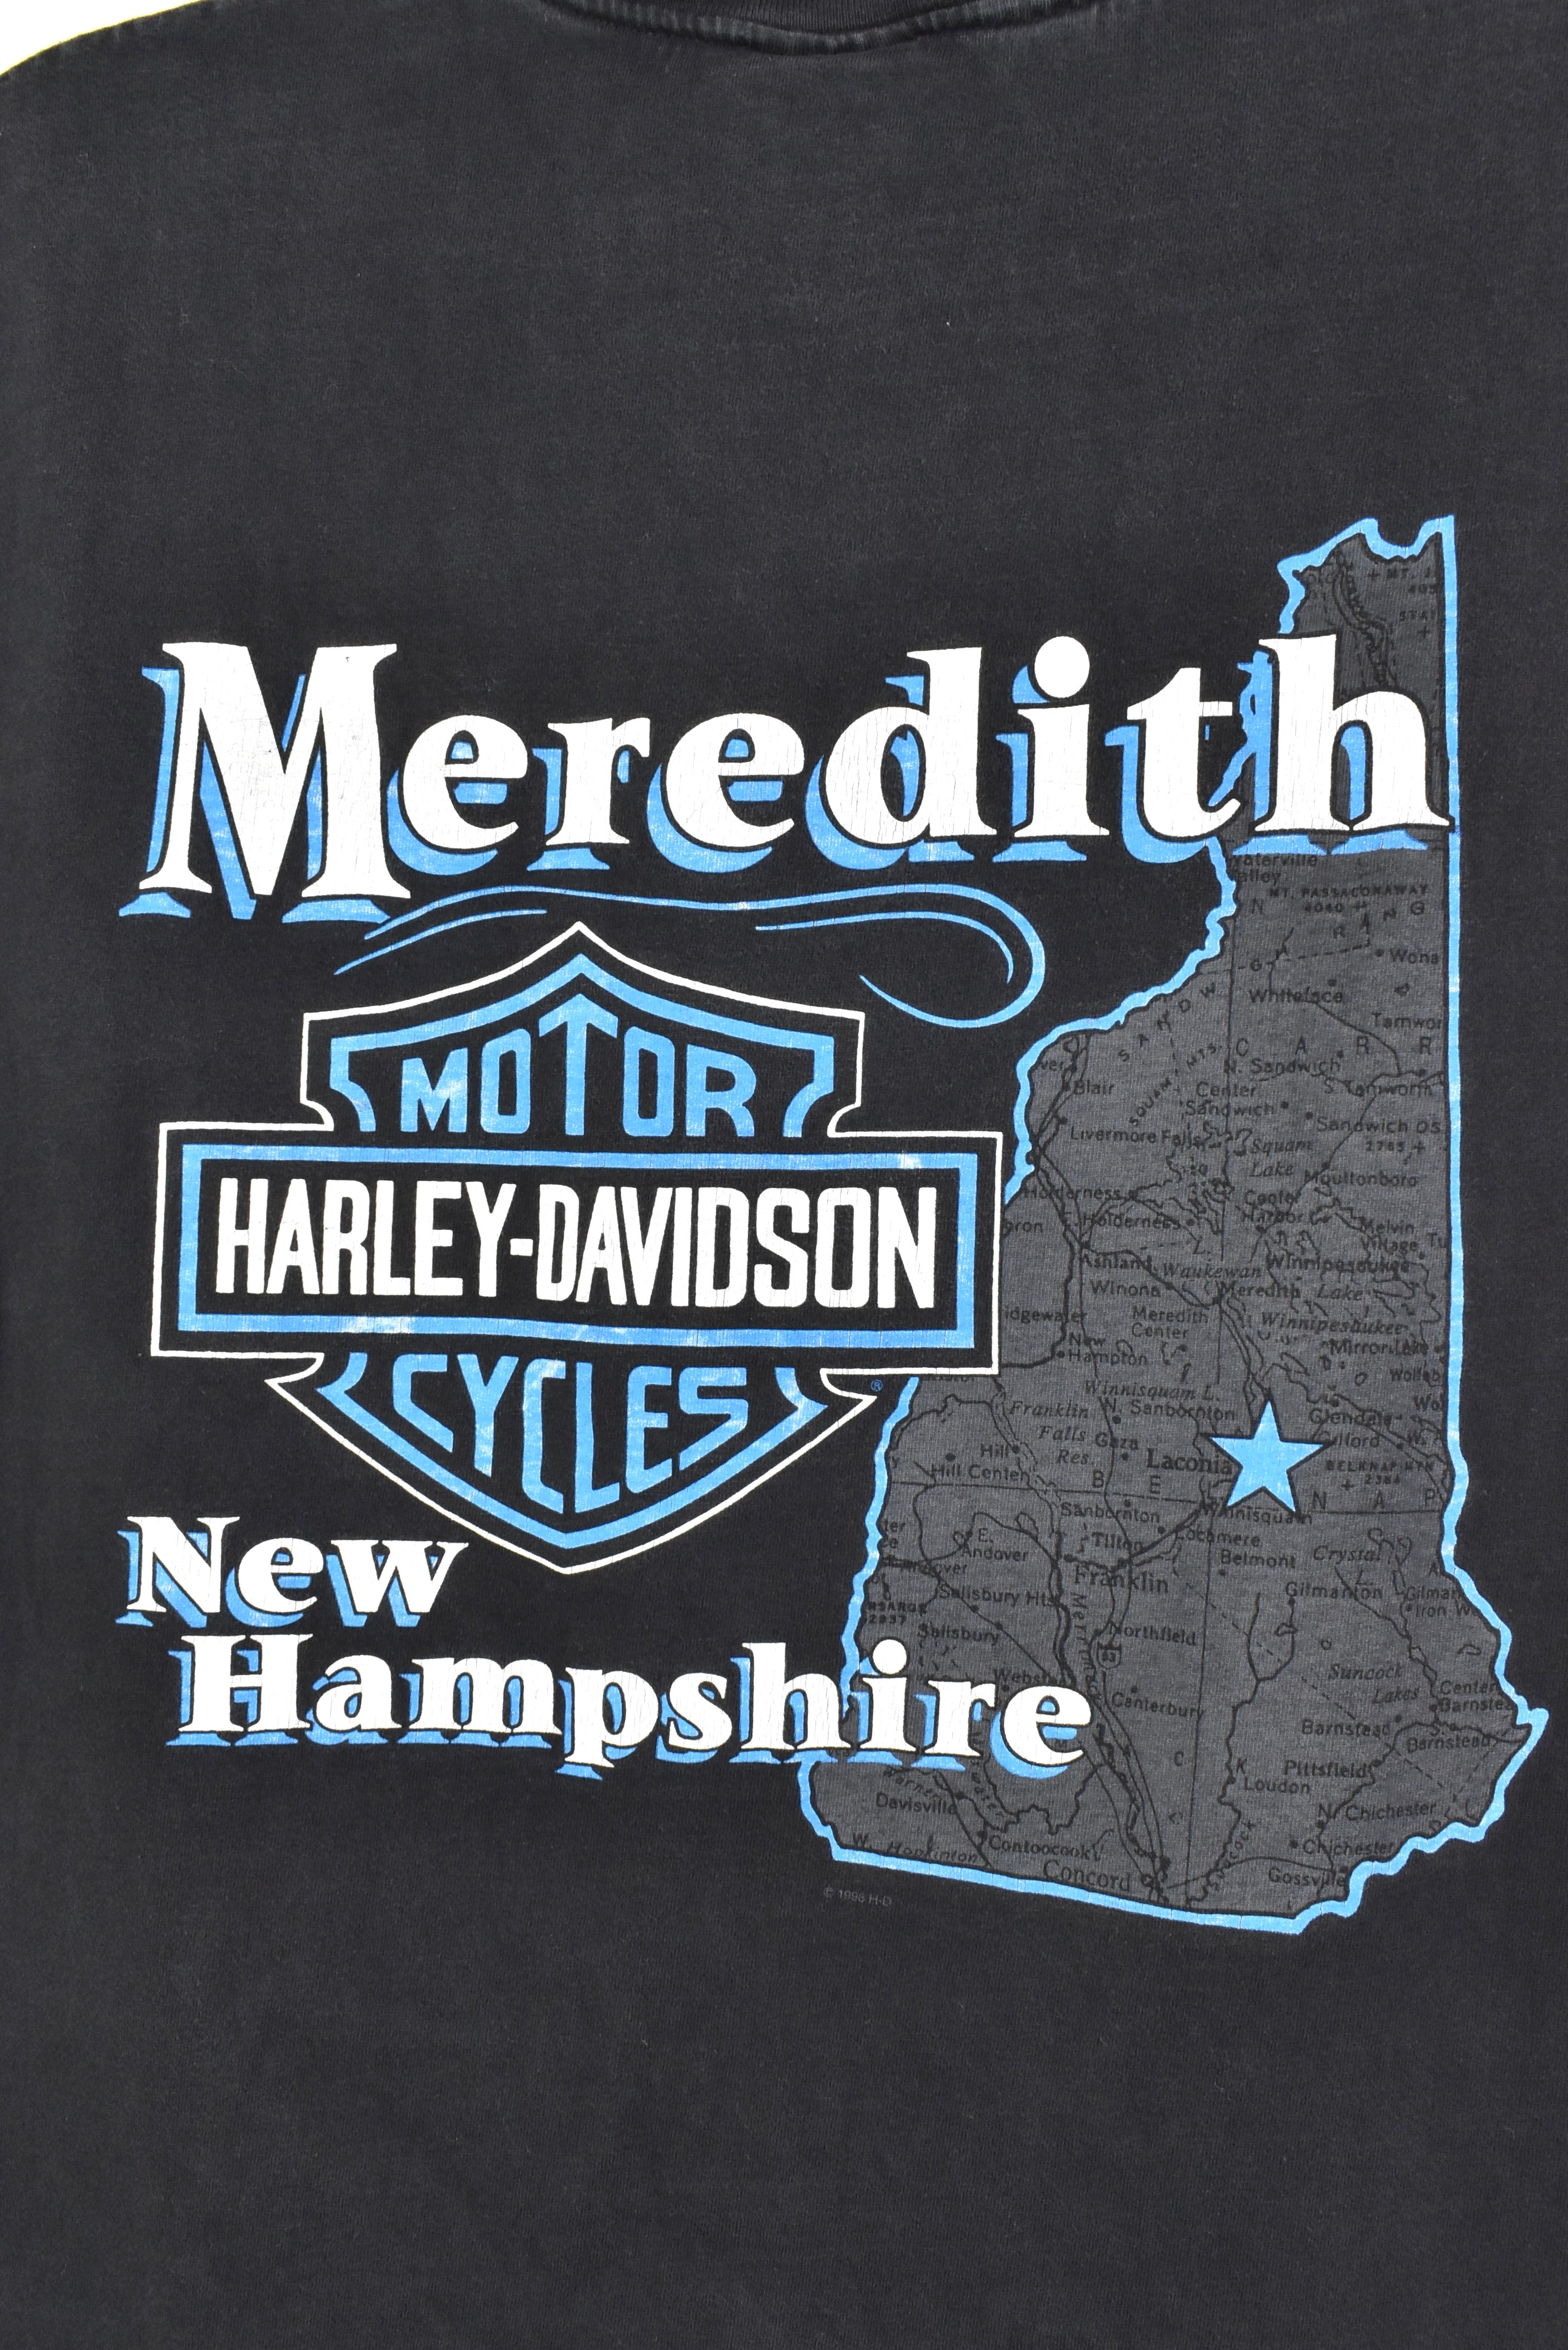 Vintage Harley Davidson shirt, 1998 biker graphic tee - large, black HARLEY DAVIDSON